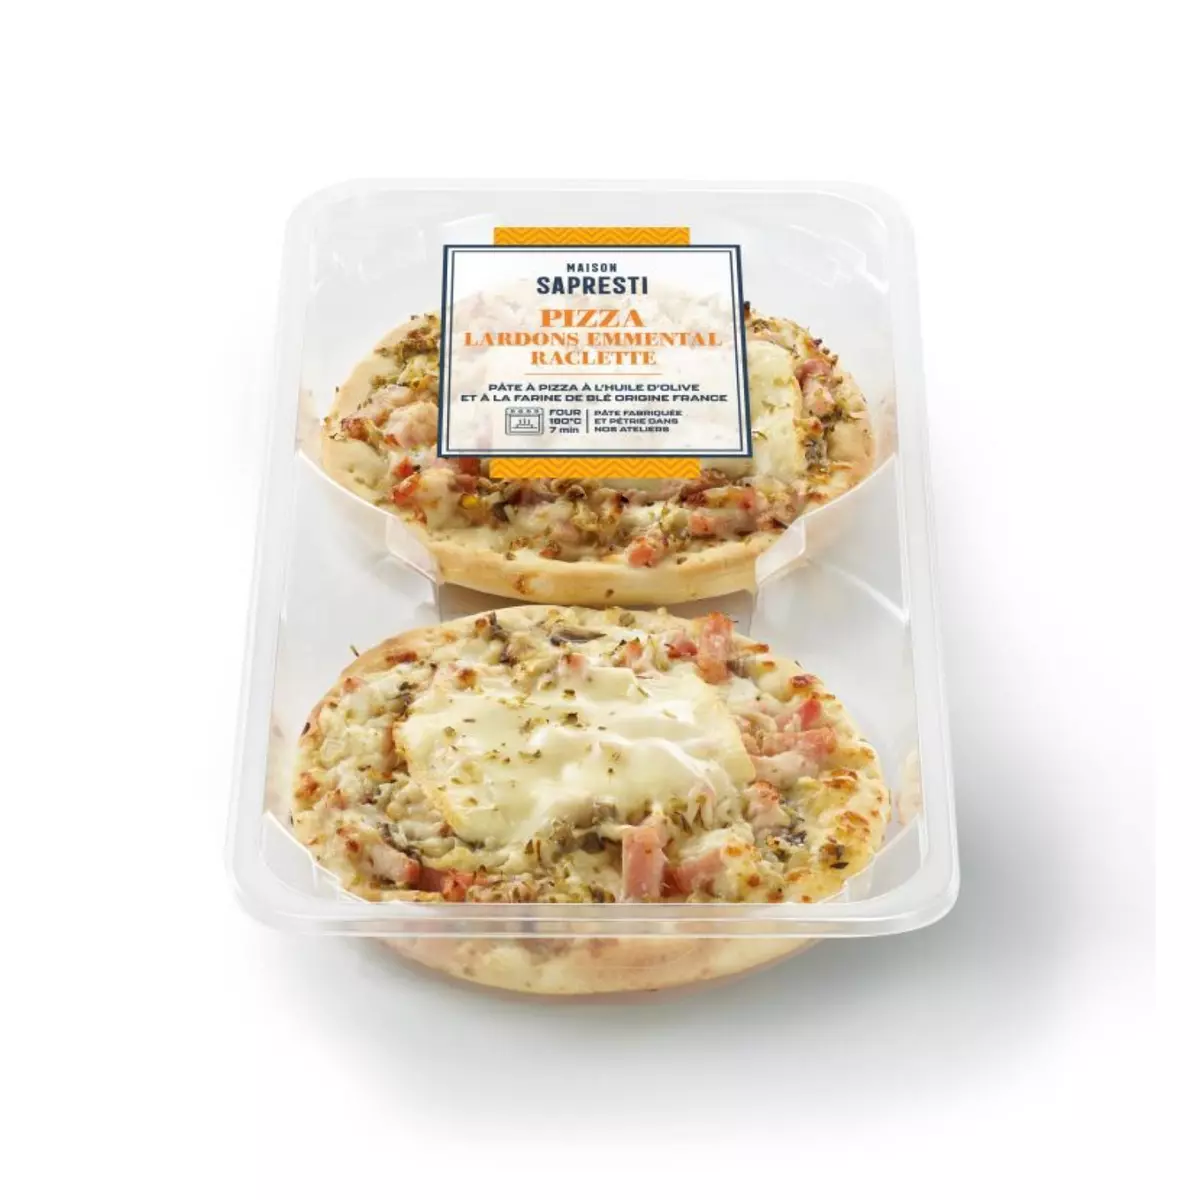 MAISON SAPRESTI Pizza lardons emmental raclette 2x140g